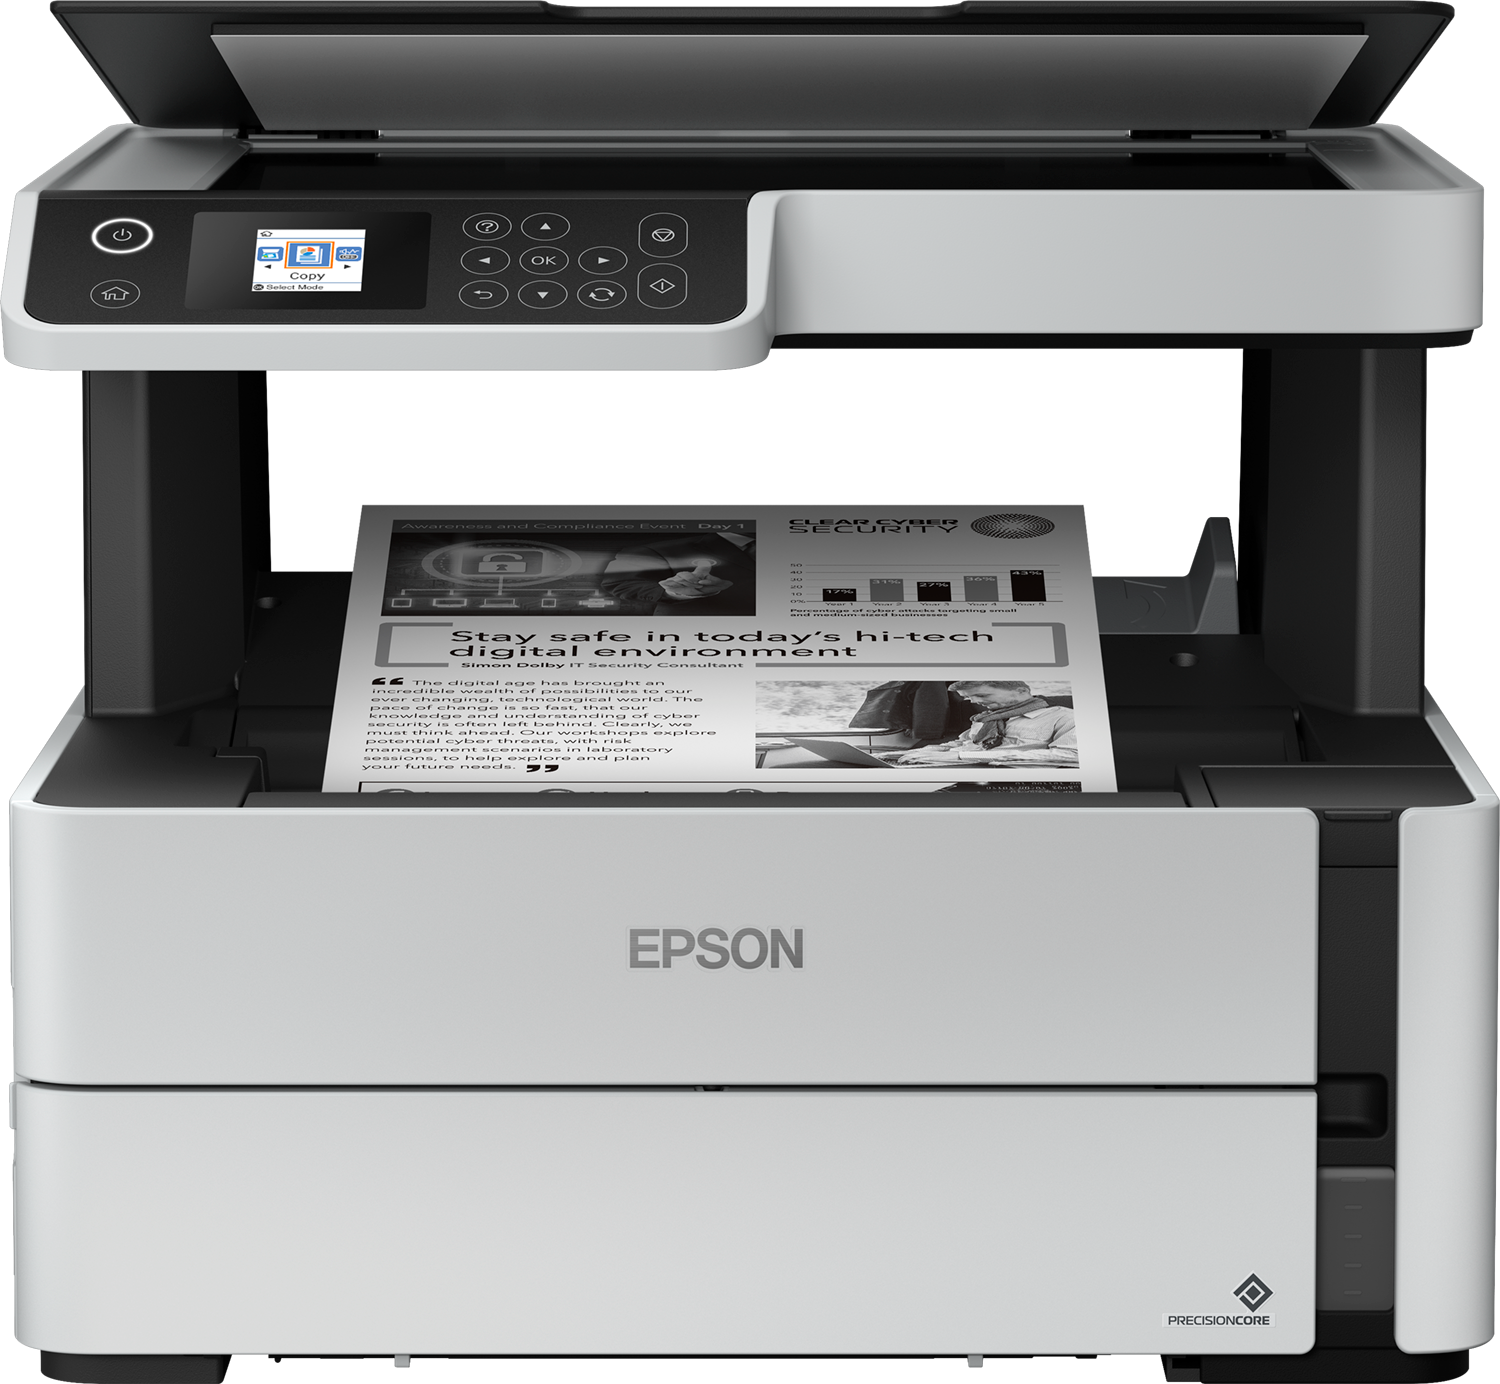 Impresora Multifuncional Epson M2170, Impresora Multifuncional Epson M2170